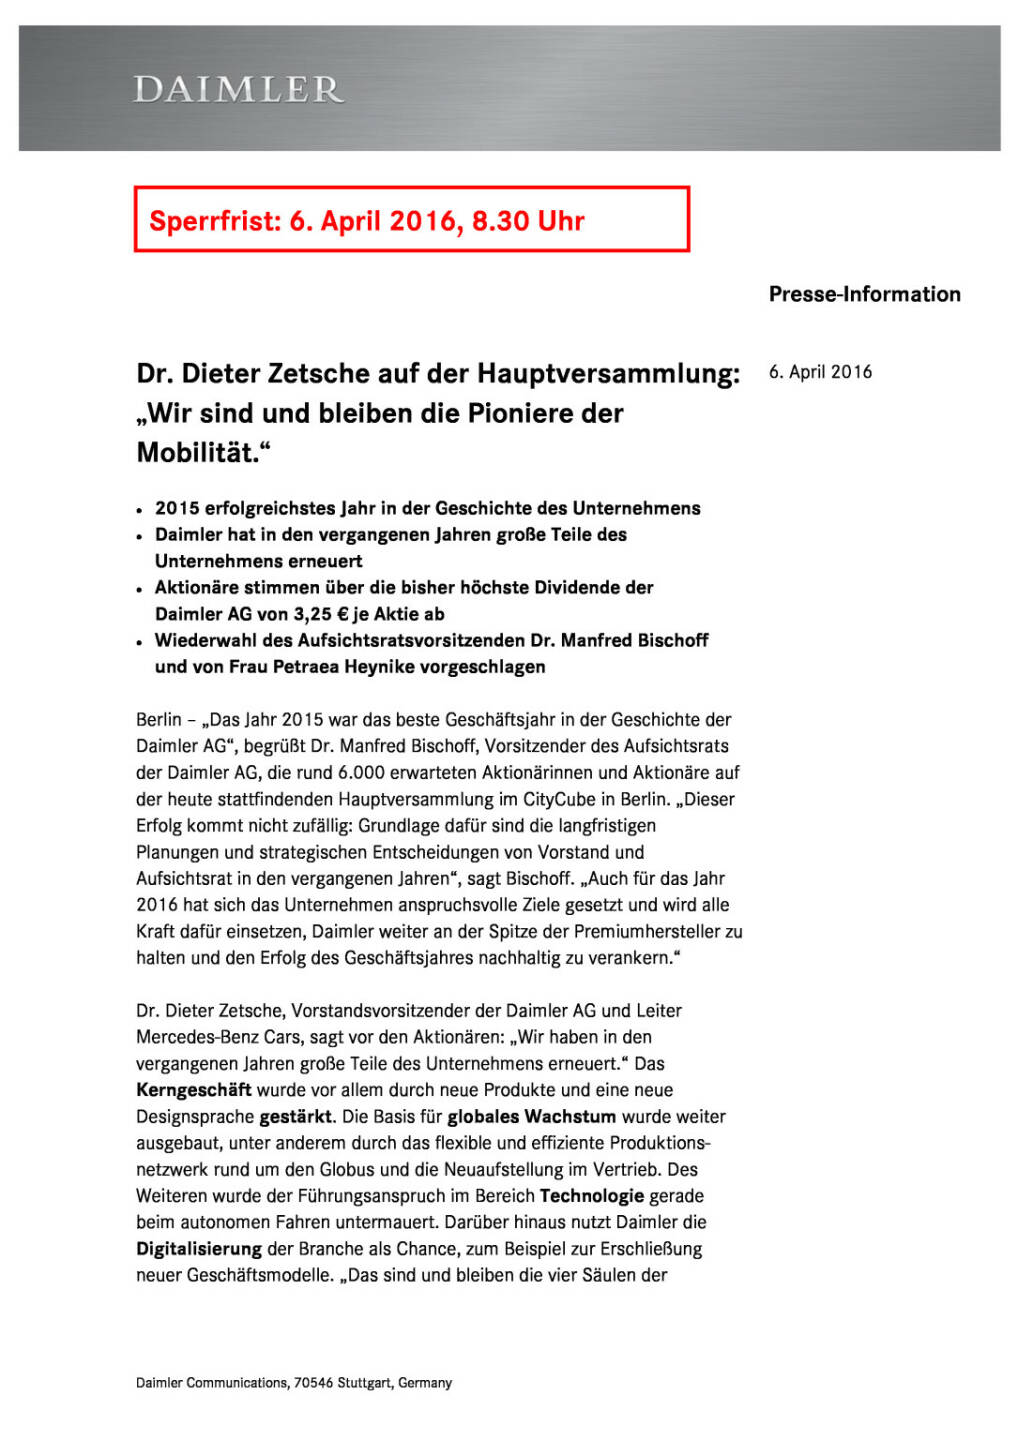 Daimler: Geschäftsjahr 2015, Seite 1/9, komplettes Dokument unter http://boerse-social.com/static/uploads/file_851_daimler_geschaftsjahr_2015.pdf